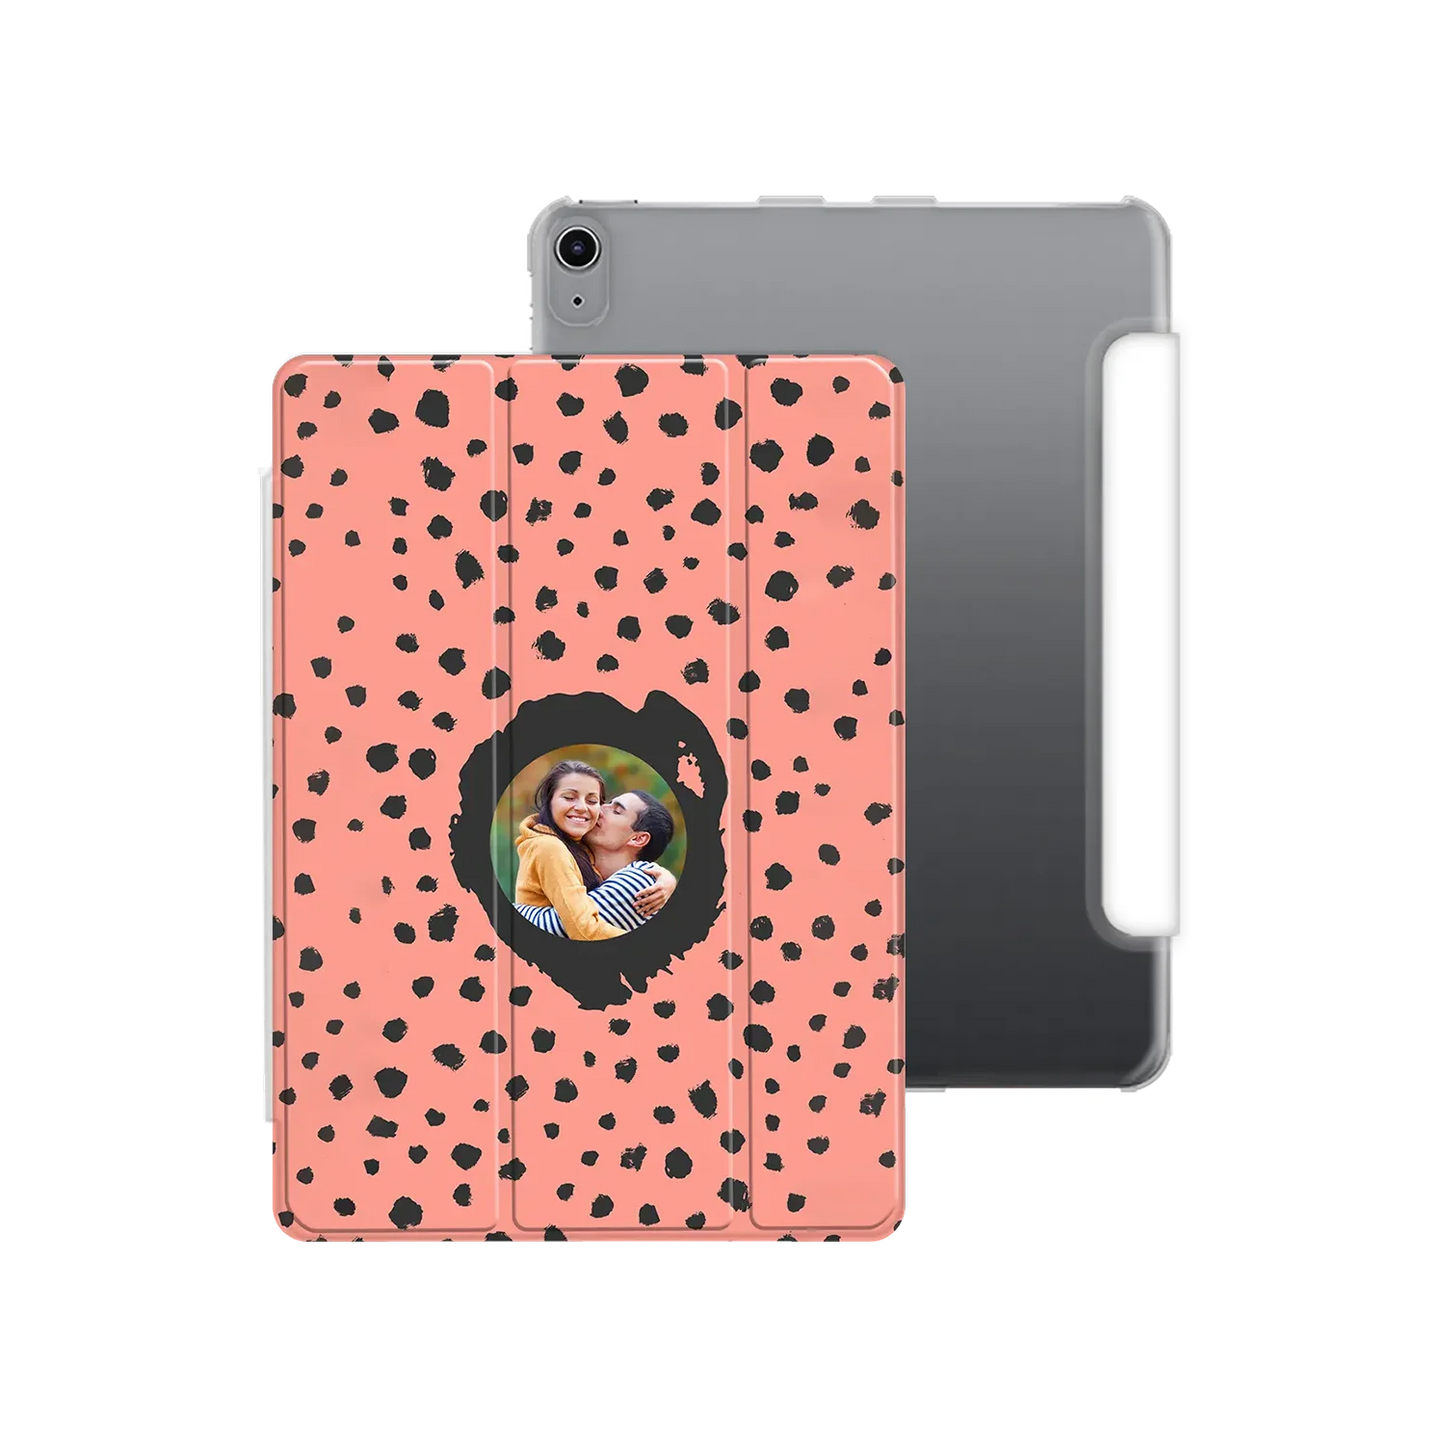 Grunge Dots Photo Style - Personnalisé iPad coque